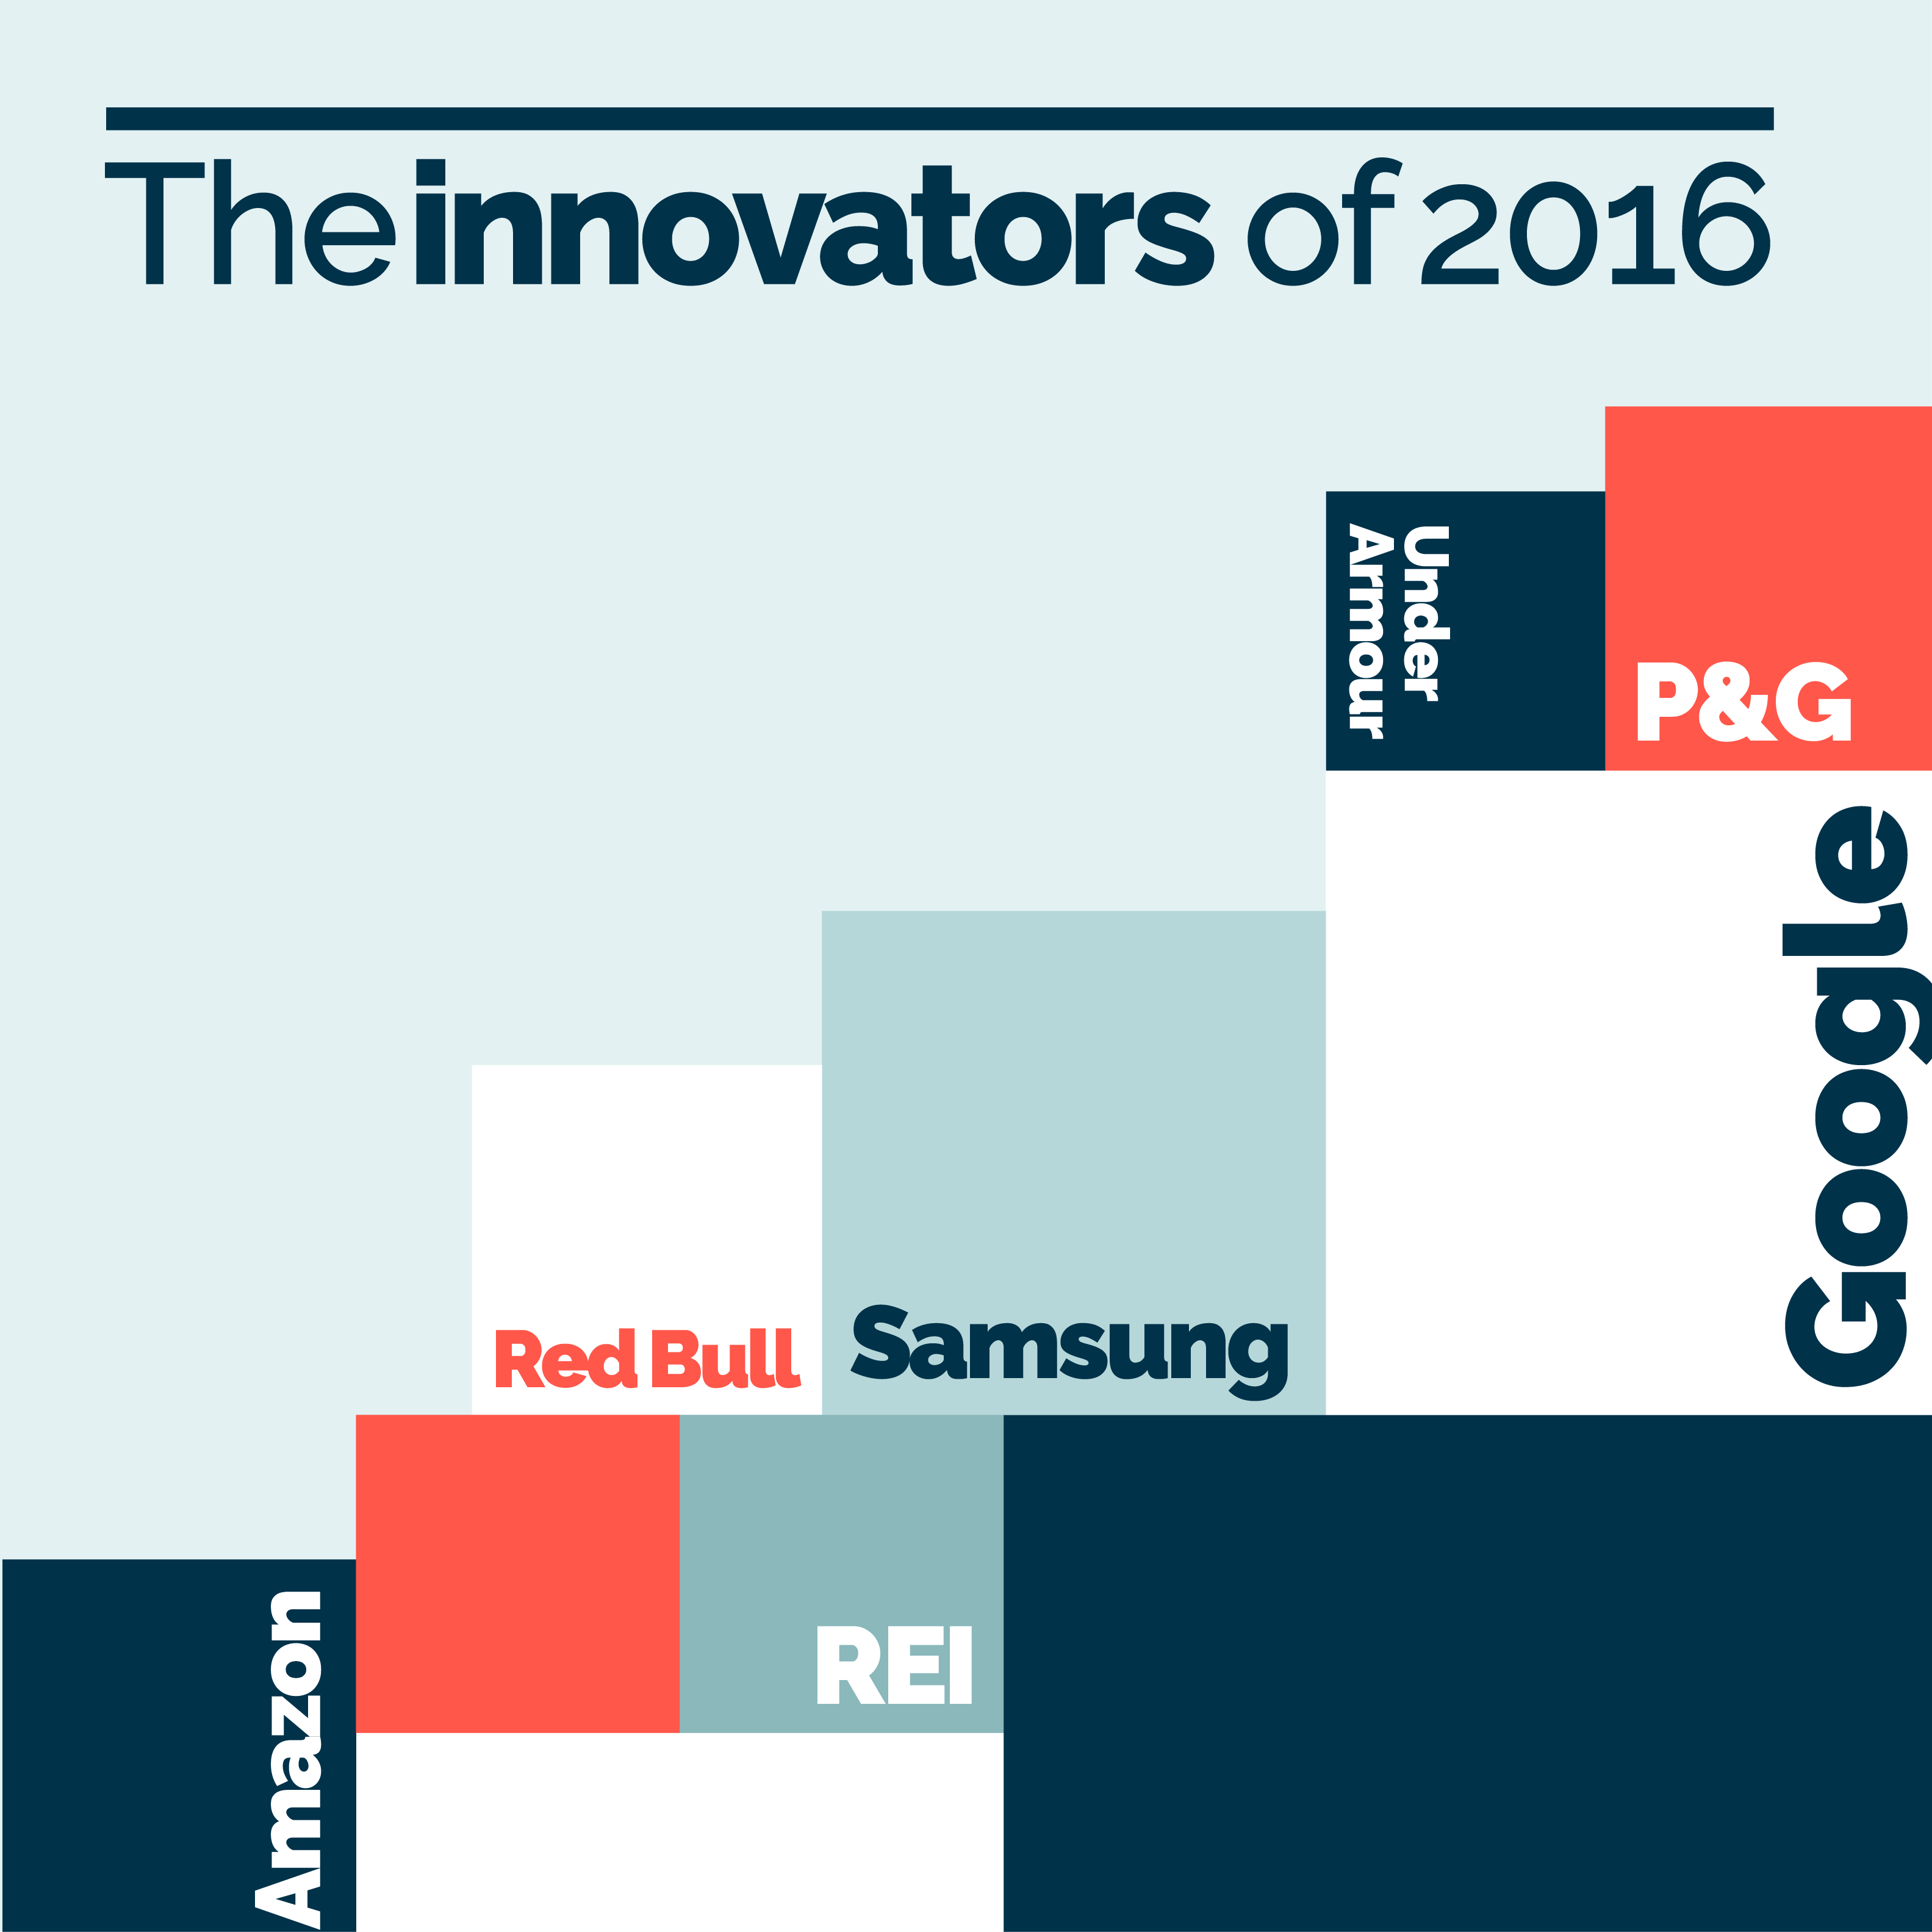 The innovators of 2016